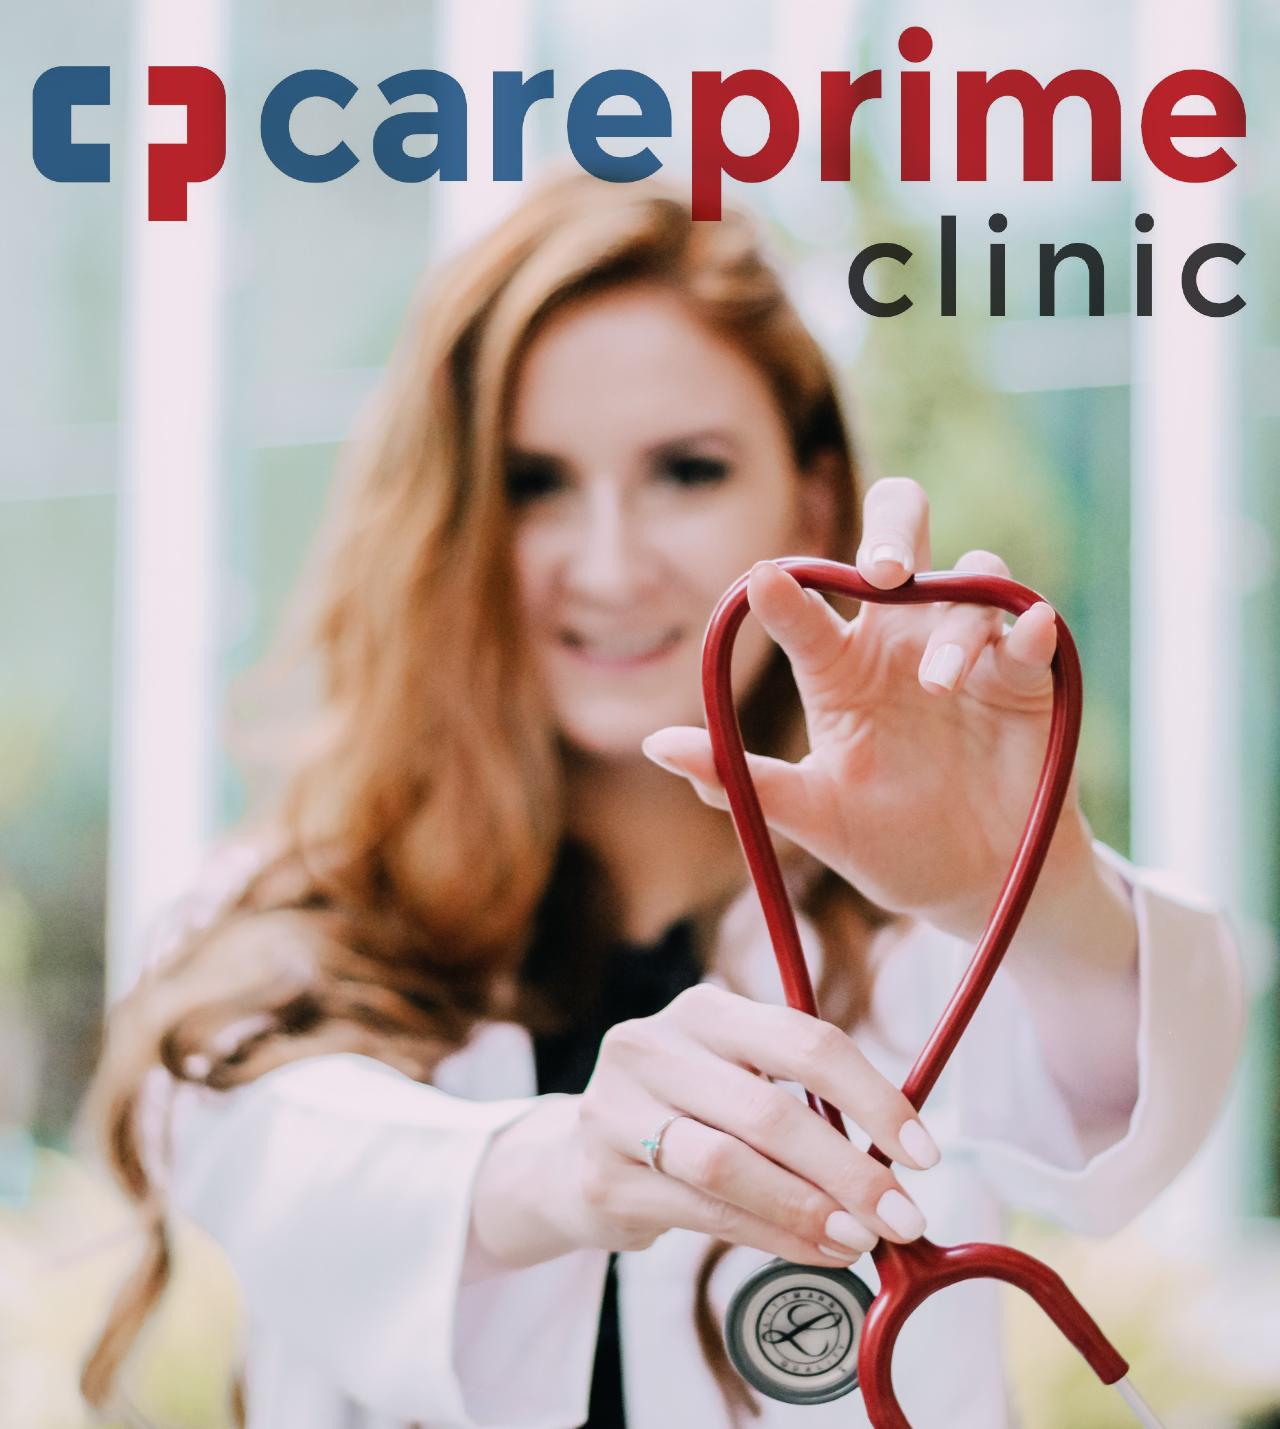 Careprime Clinic 15030 Hwy 6, Rosharon Texas 77583